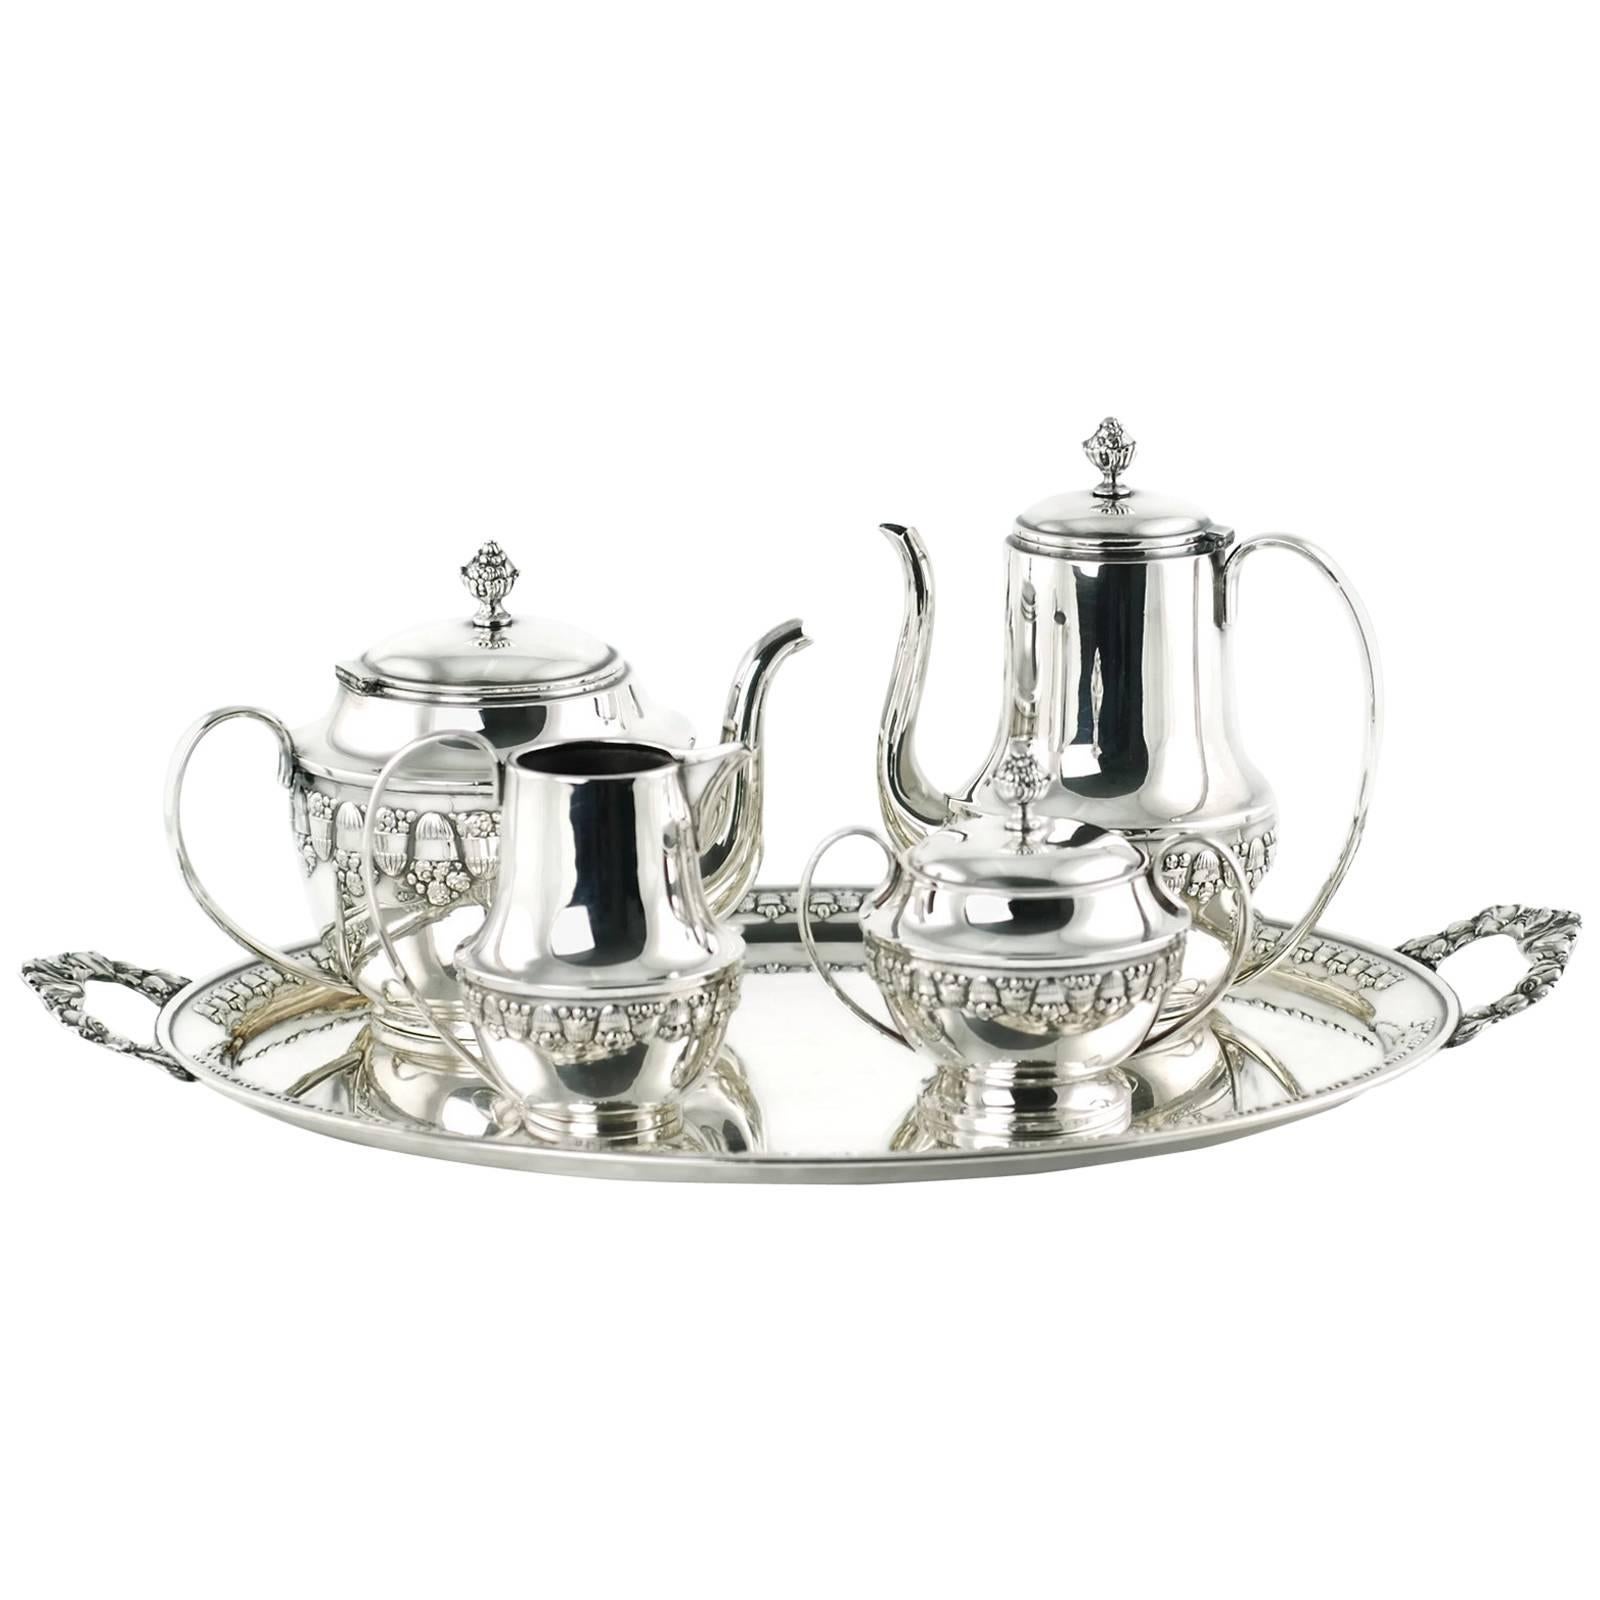 Wolkenstein & Glückselig Silver Plated Tea Set after Emanuel Josef Margold